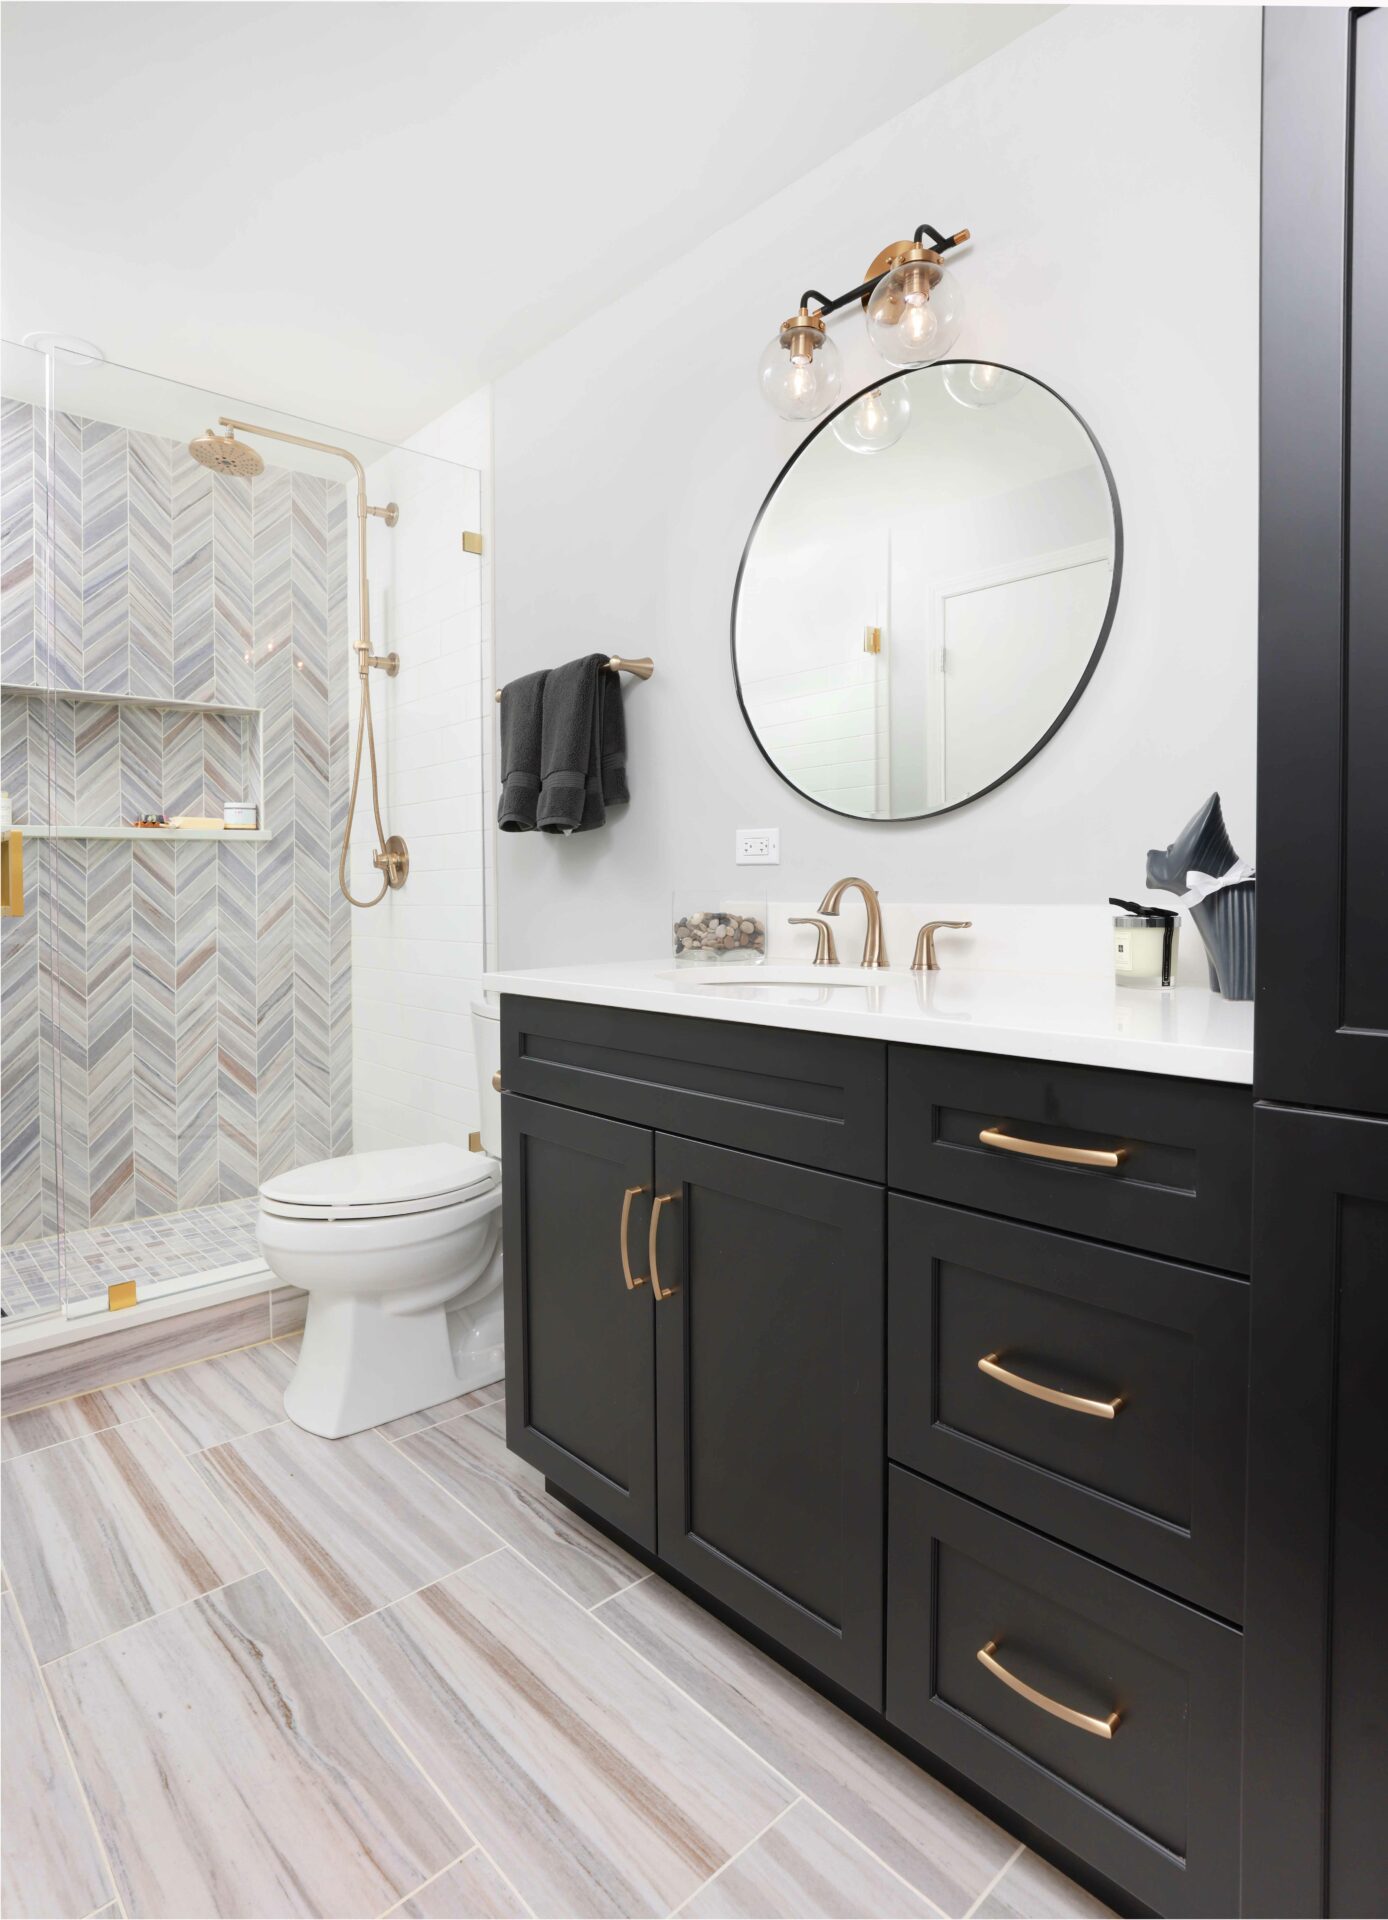 primary bathroom with herringbone tile in shower, gold fixtures and dark vanity